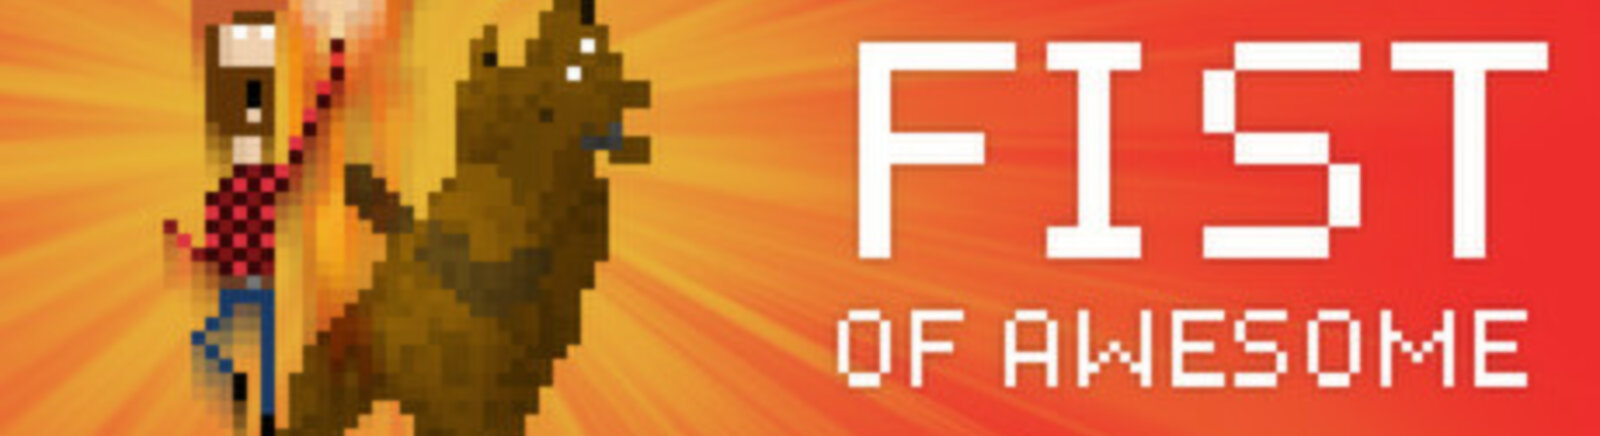 Дата выхода Fist of Awesome  на PC, iOS и Android в России и во всем мире